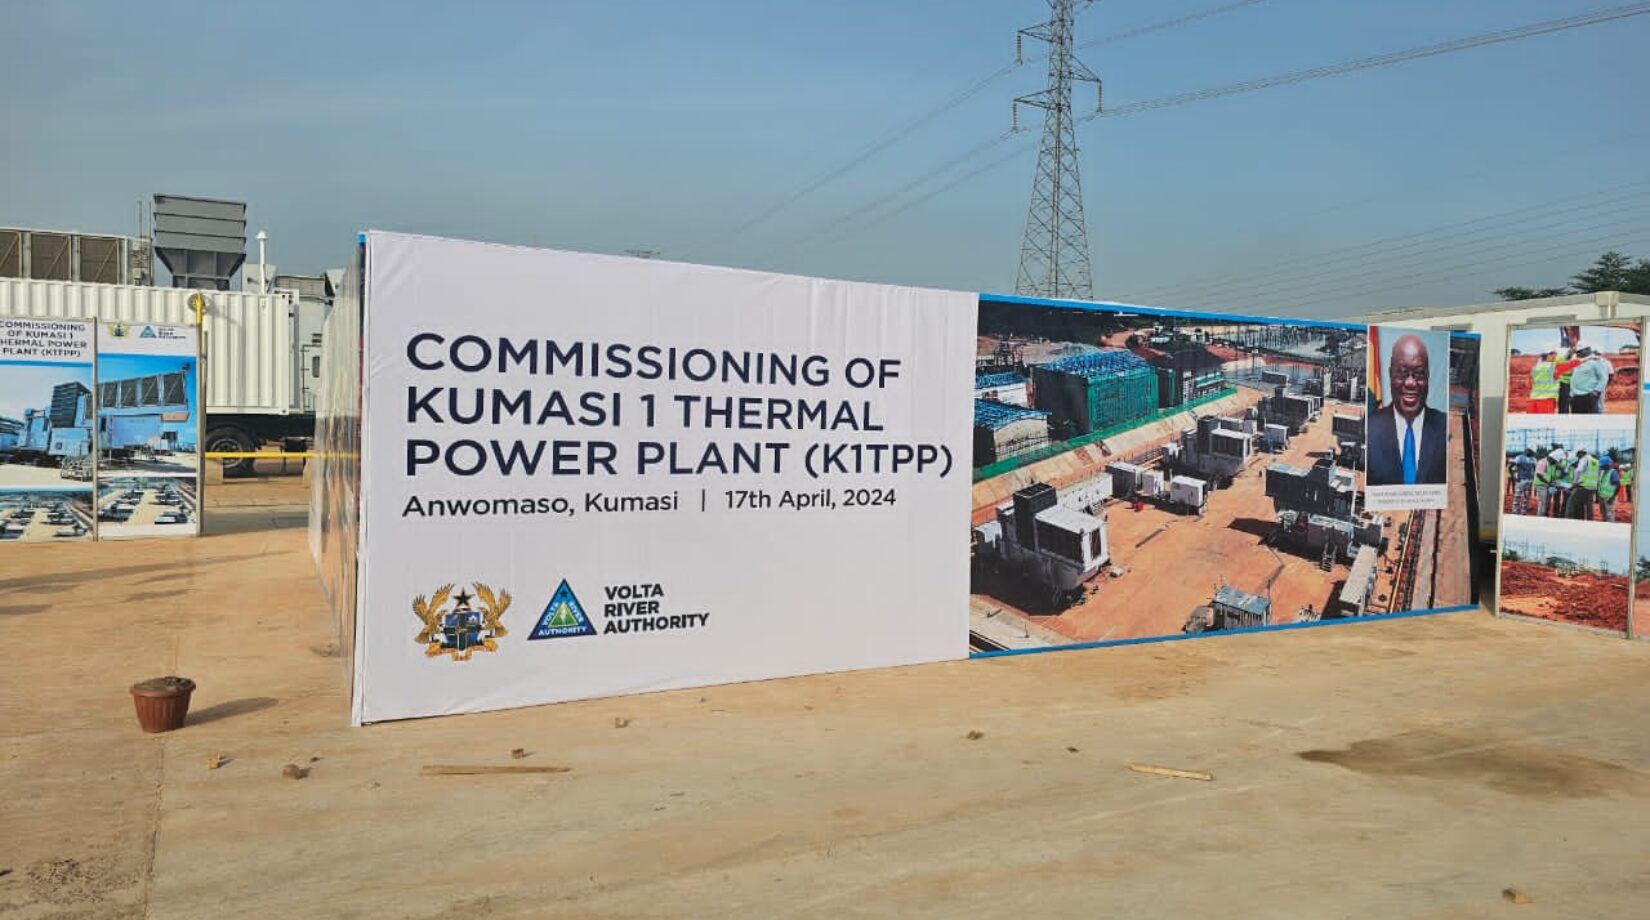 Andrew Egyapa Mercer,Former Deputy Energy Minister Opens up on Recommissioning of Ameri Power Plant